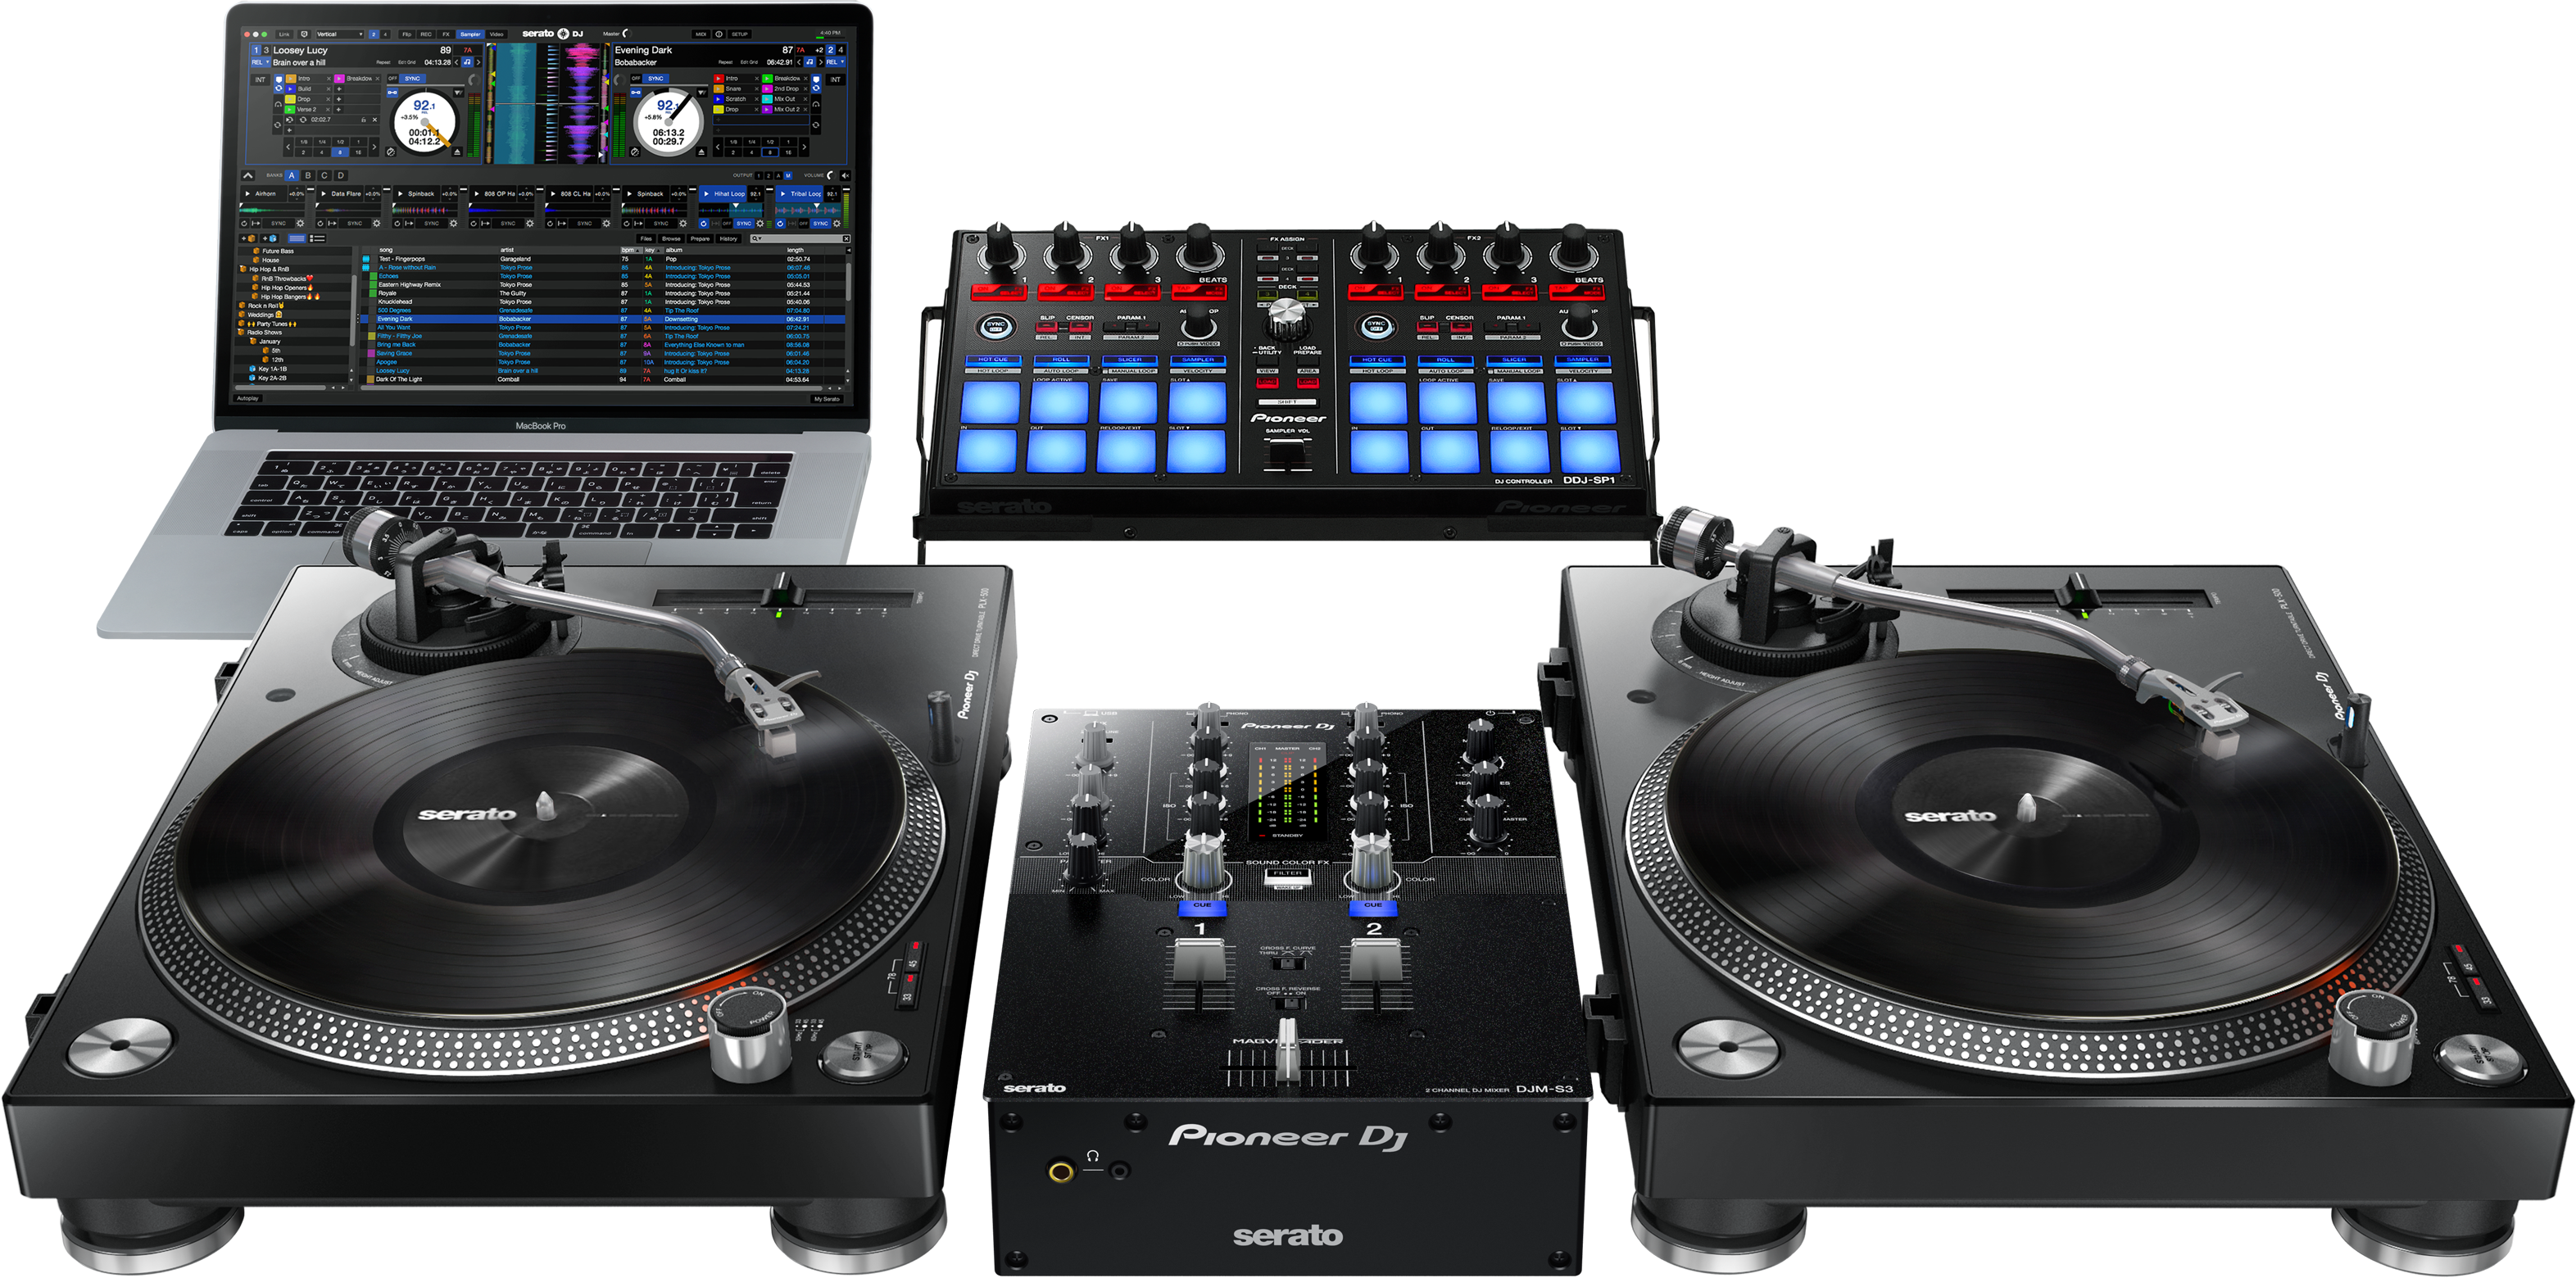 Pioneer Dj Djm-s3 - DJ mixer - Variation 2